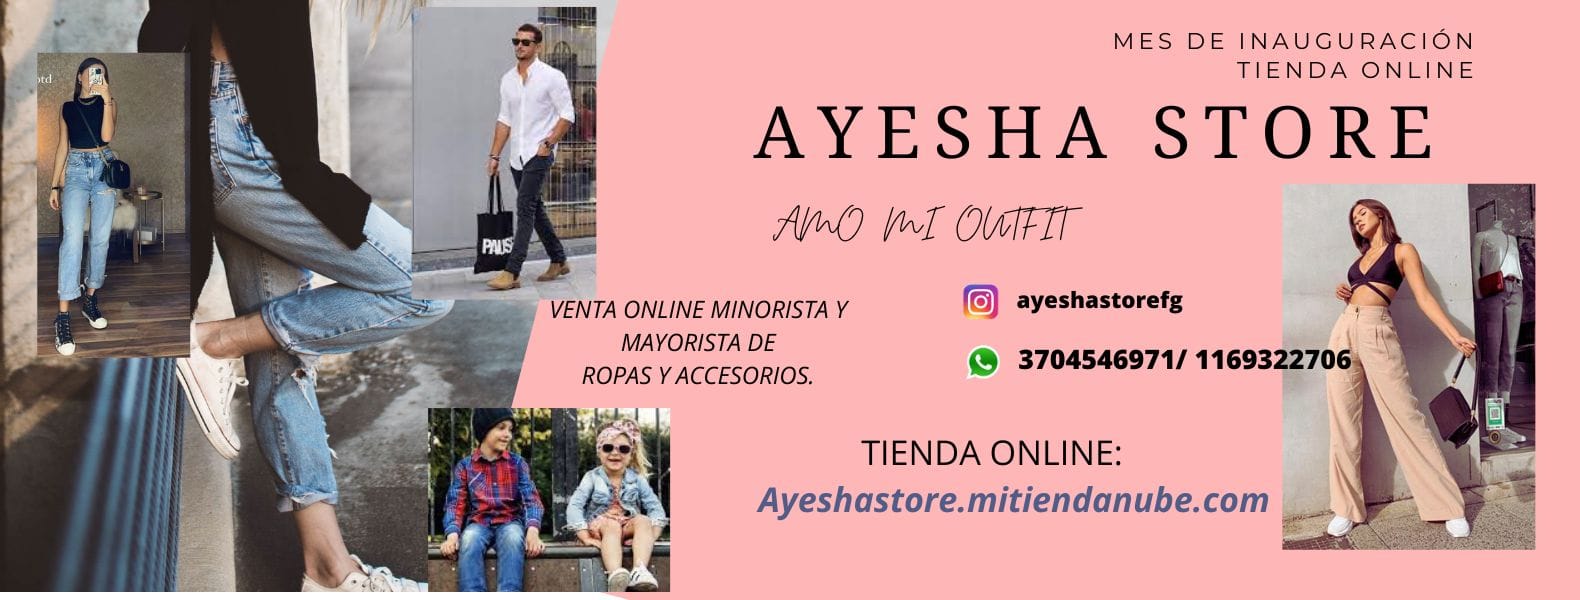 Ayesha Store